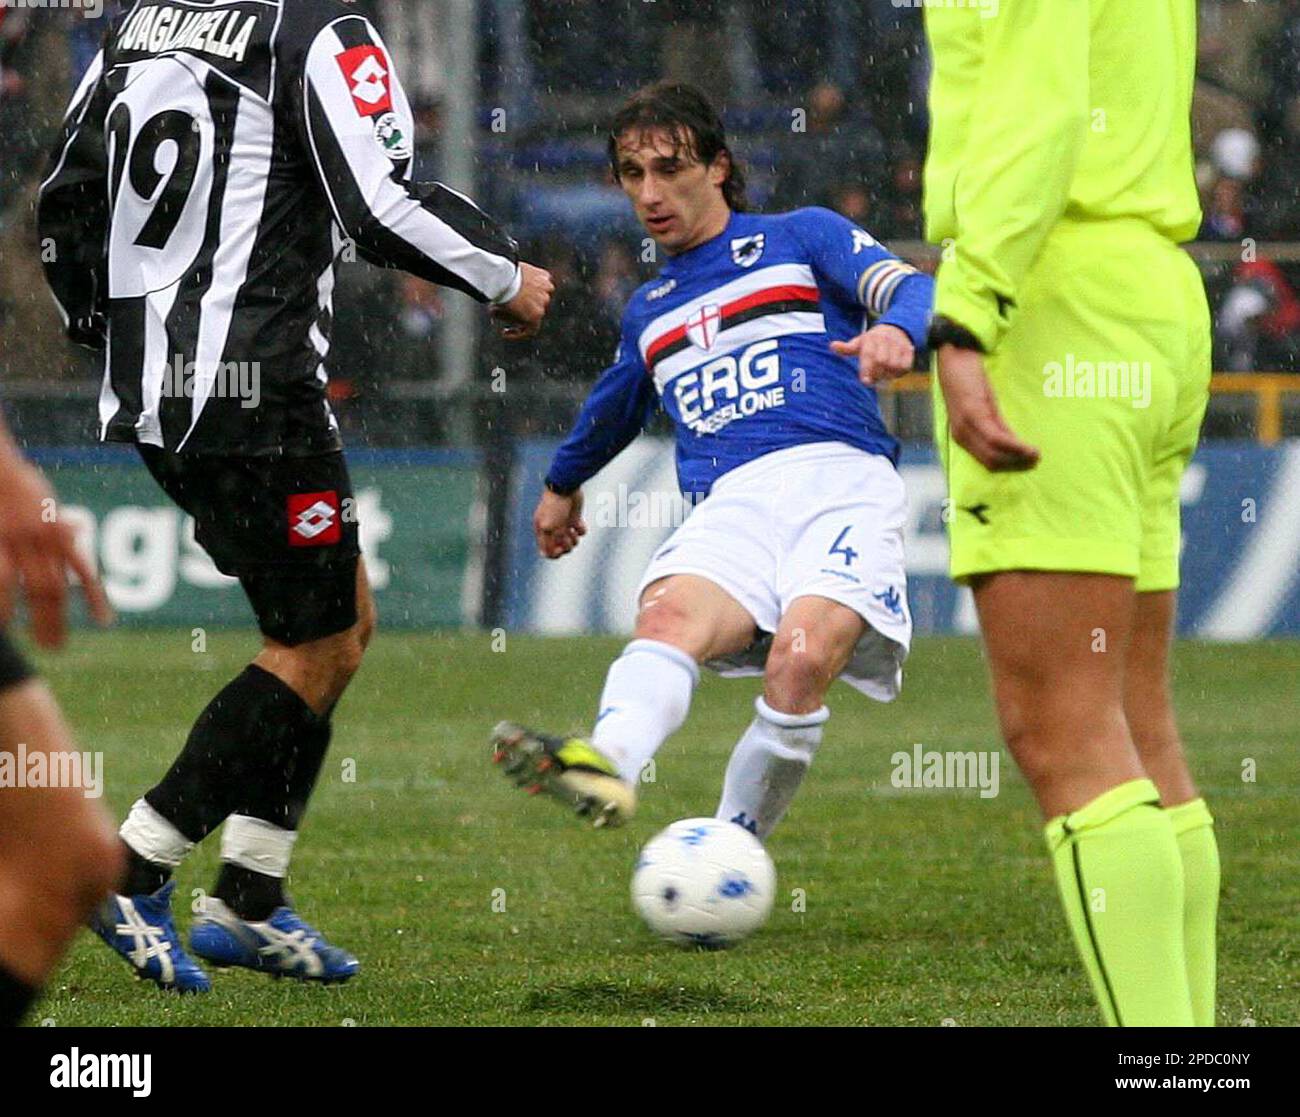 https://c8.alamy.com/comp/2PDC0NY/sampdorias-midfielder-sergio-volpi-in-action-during-an-italian-major-league-soccer-match-against-ascoli-at-the-cino-and-lillo-del-duca-stadium-in-genoa-italy-sunday-feb-19-2006-ascoli-won-2-1-ap-photoitalo-banchero-2PDC0NY.jpg